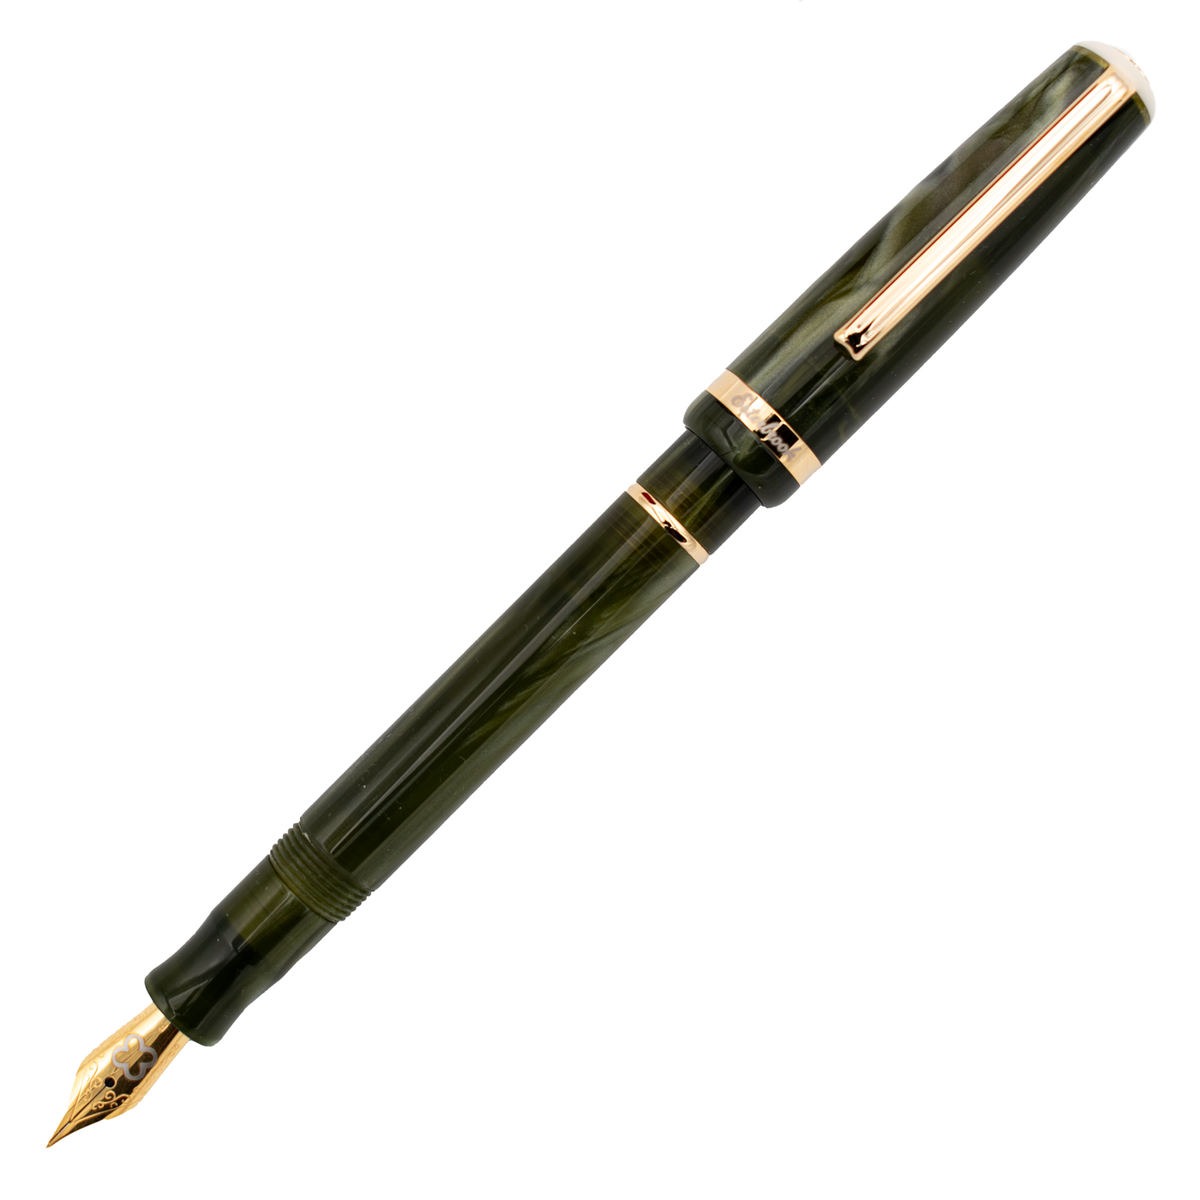 Esterbrook JR Pocket Pen- Palm Green Fountain Pen